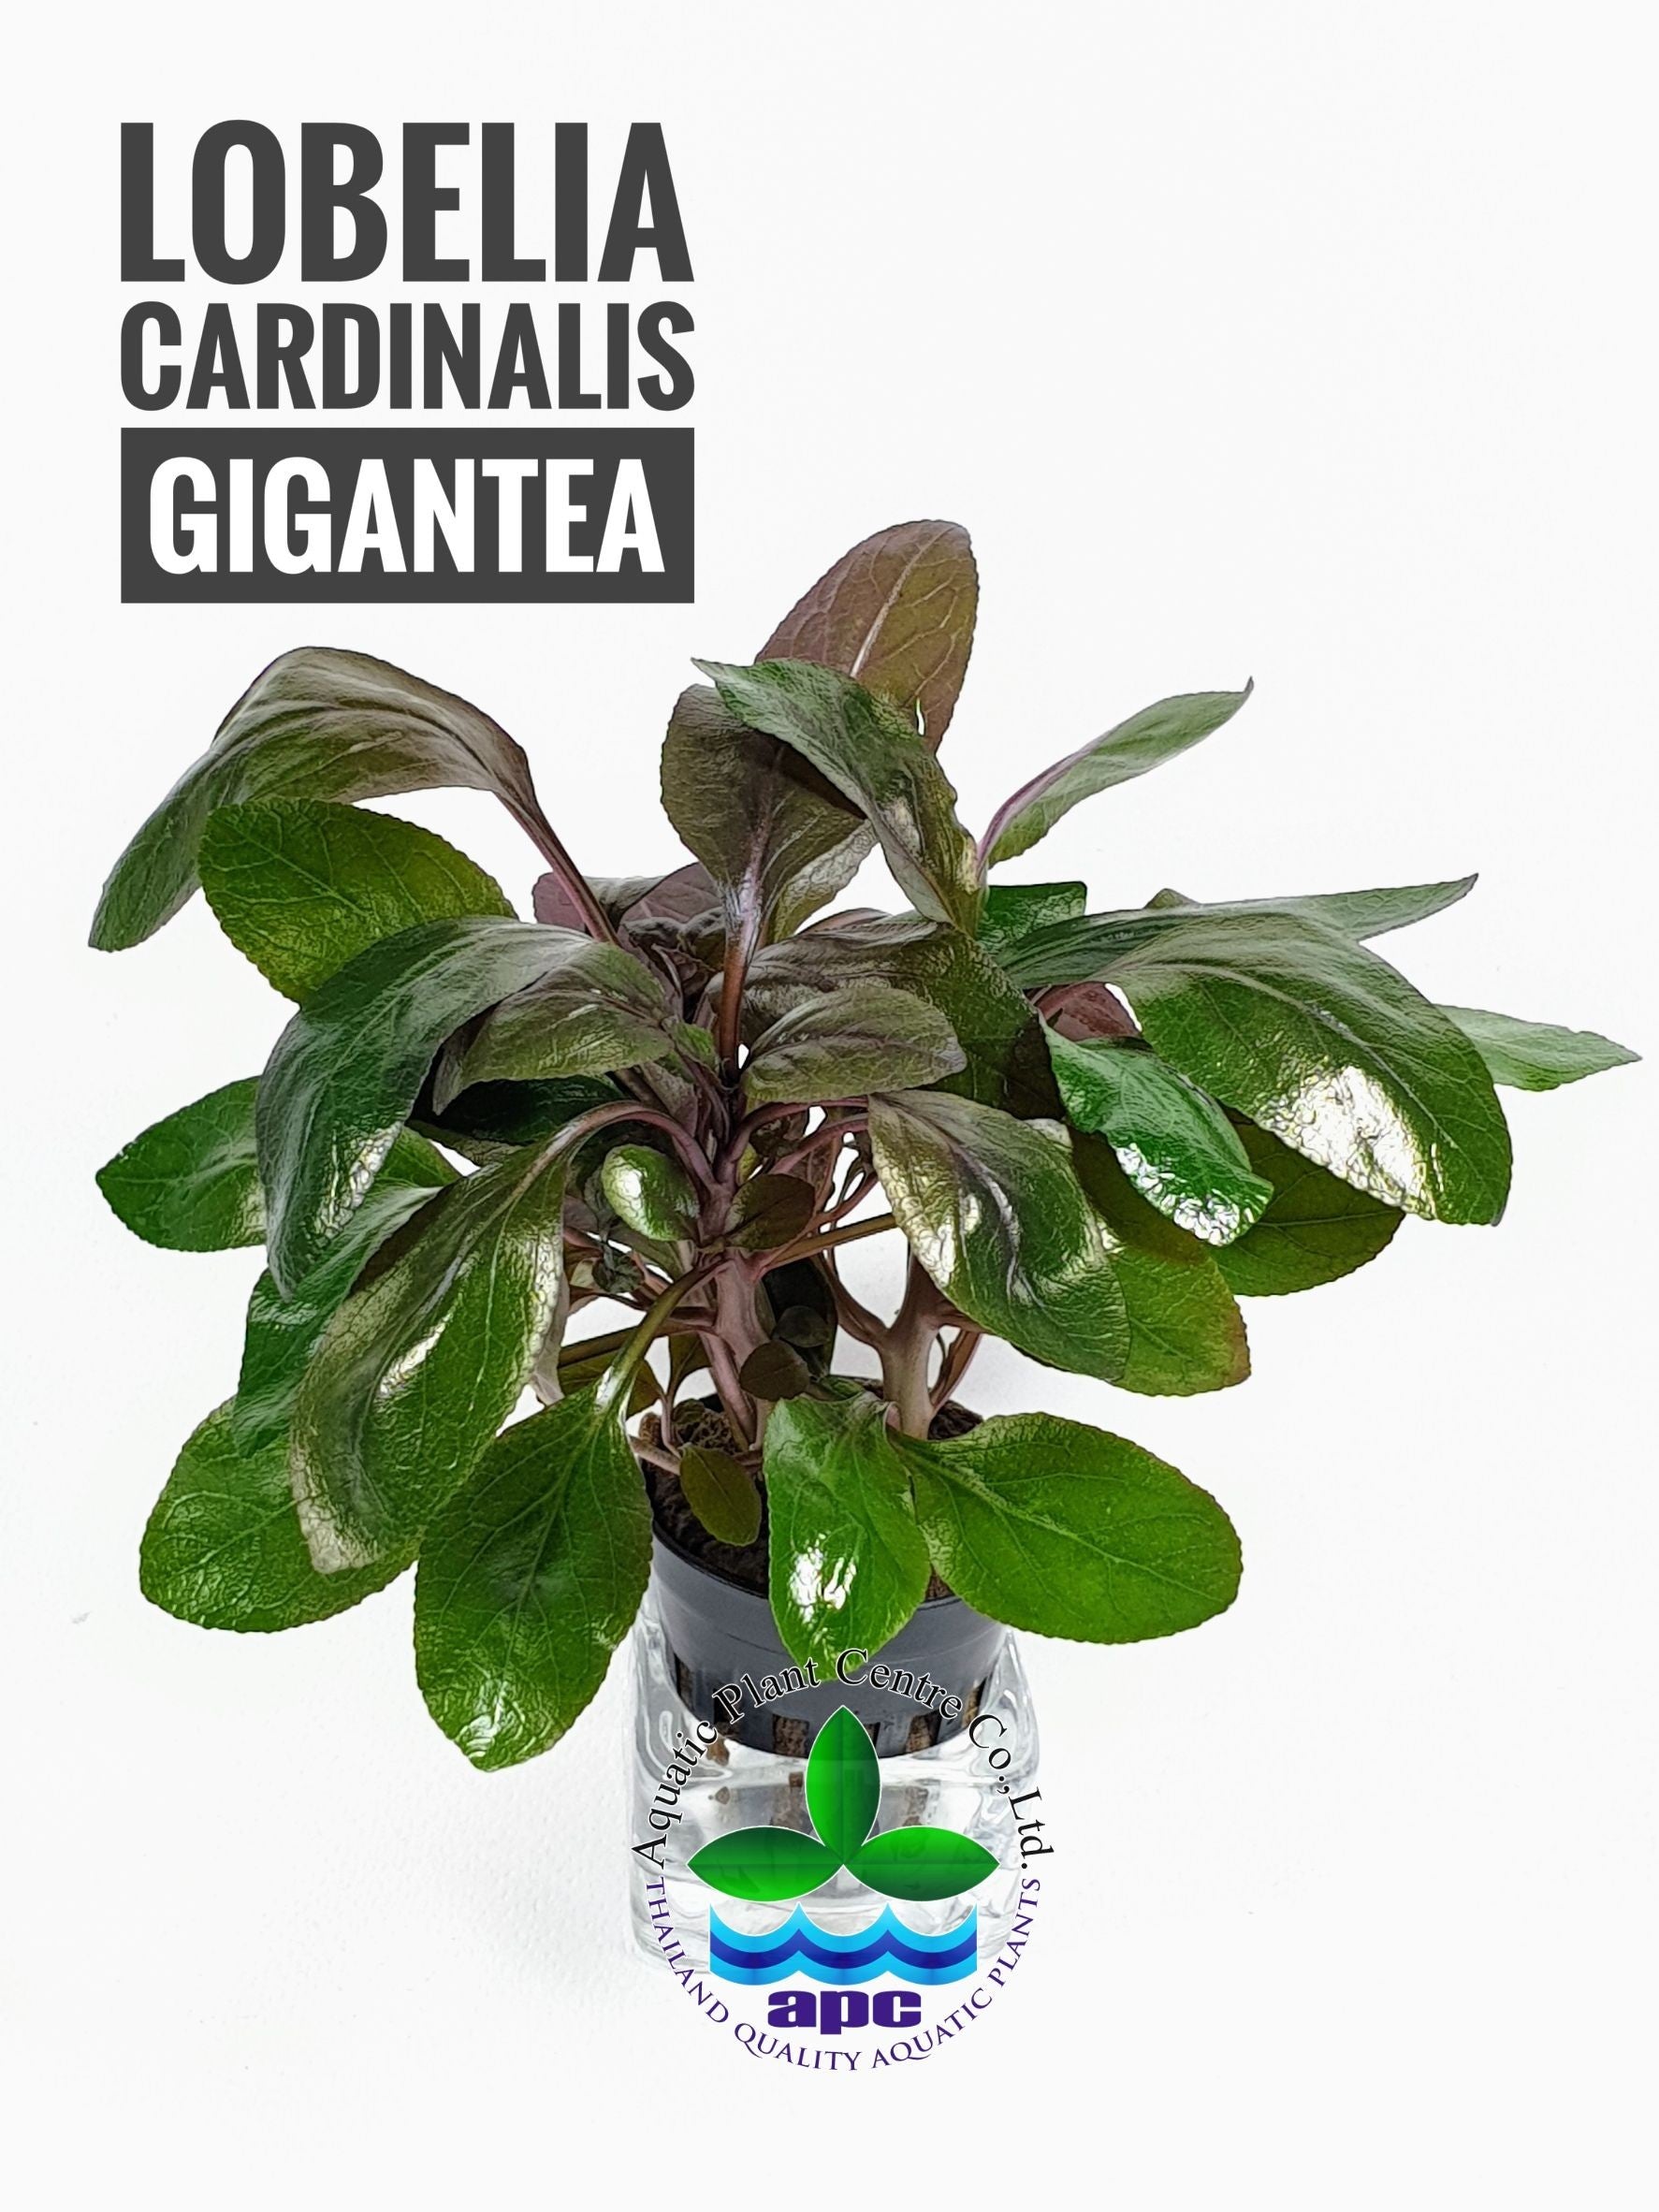 Lobelia cardinalis gigantea - Potted